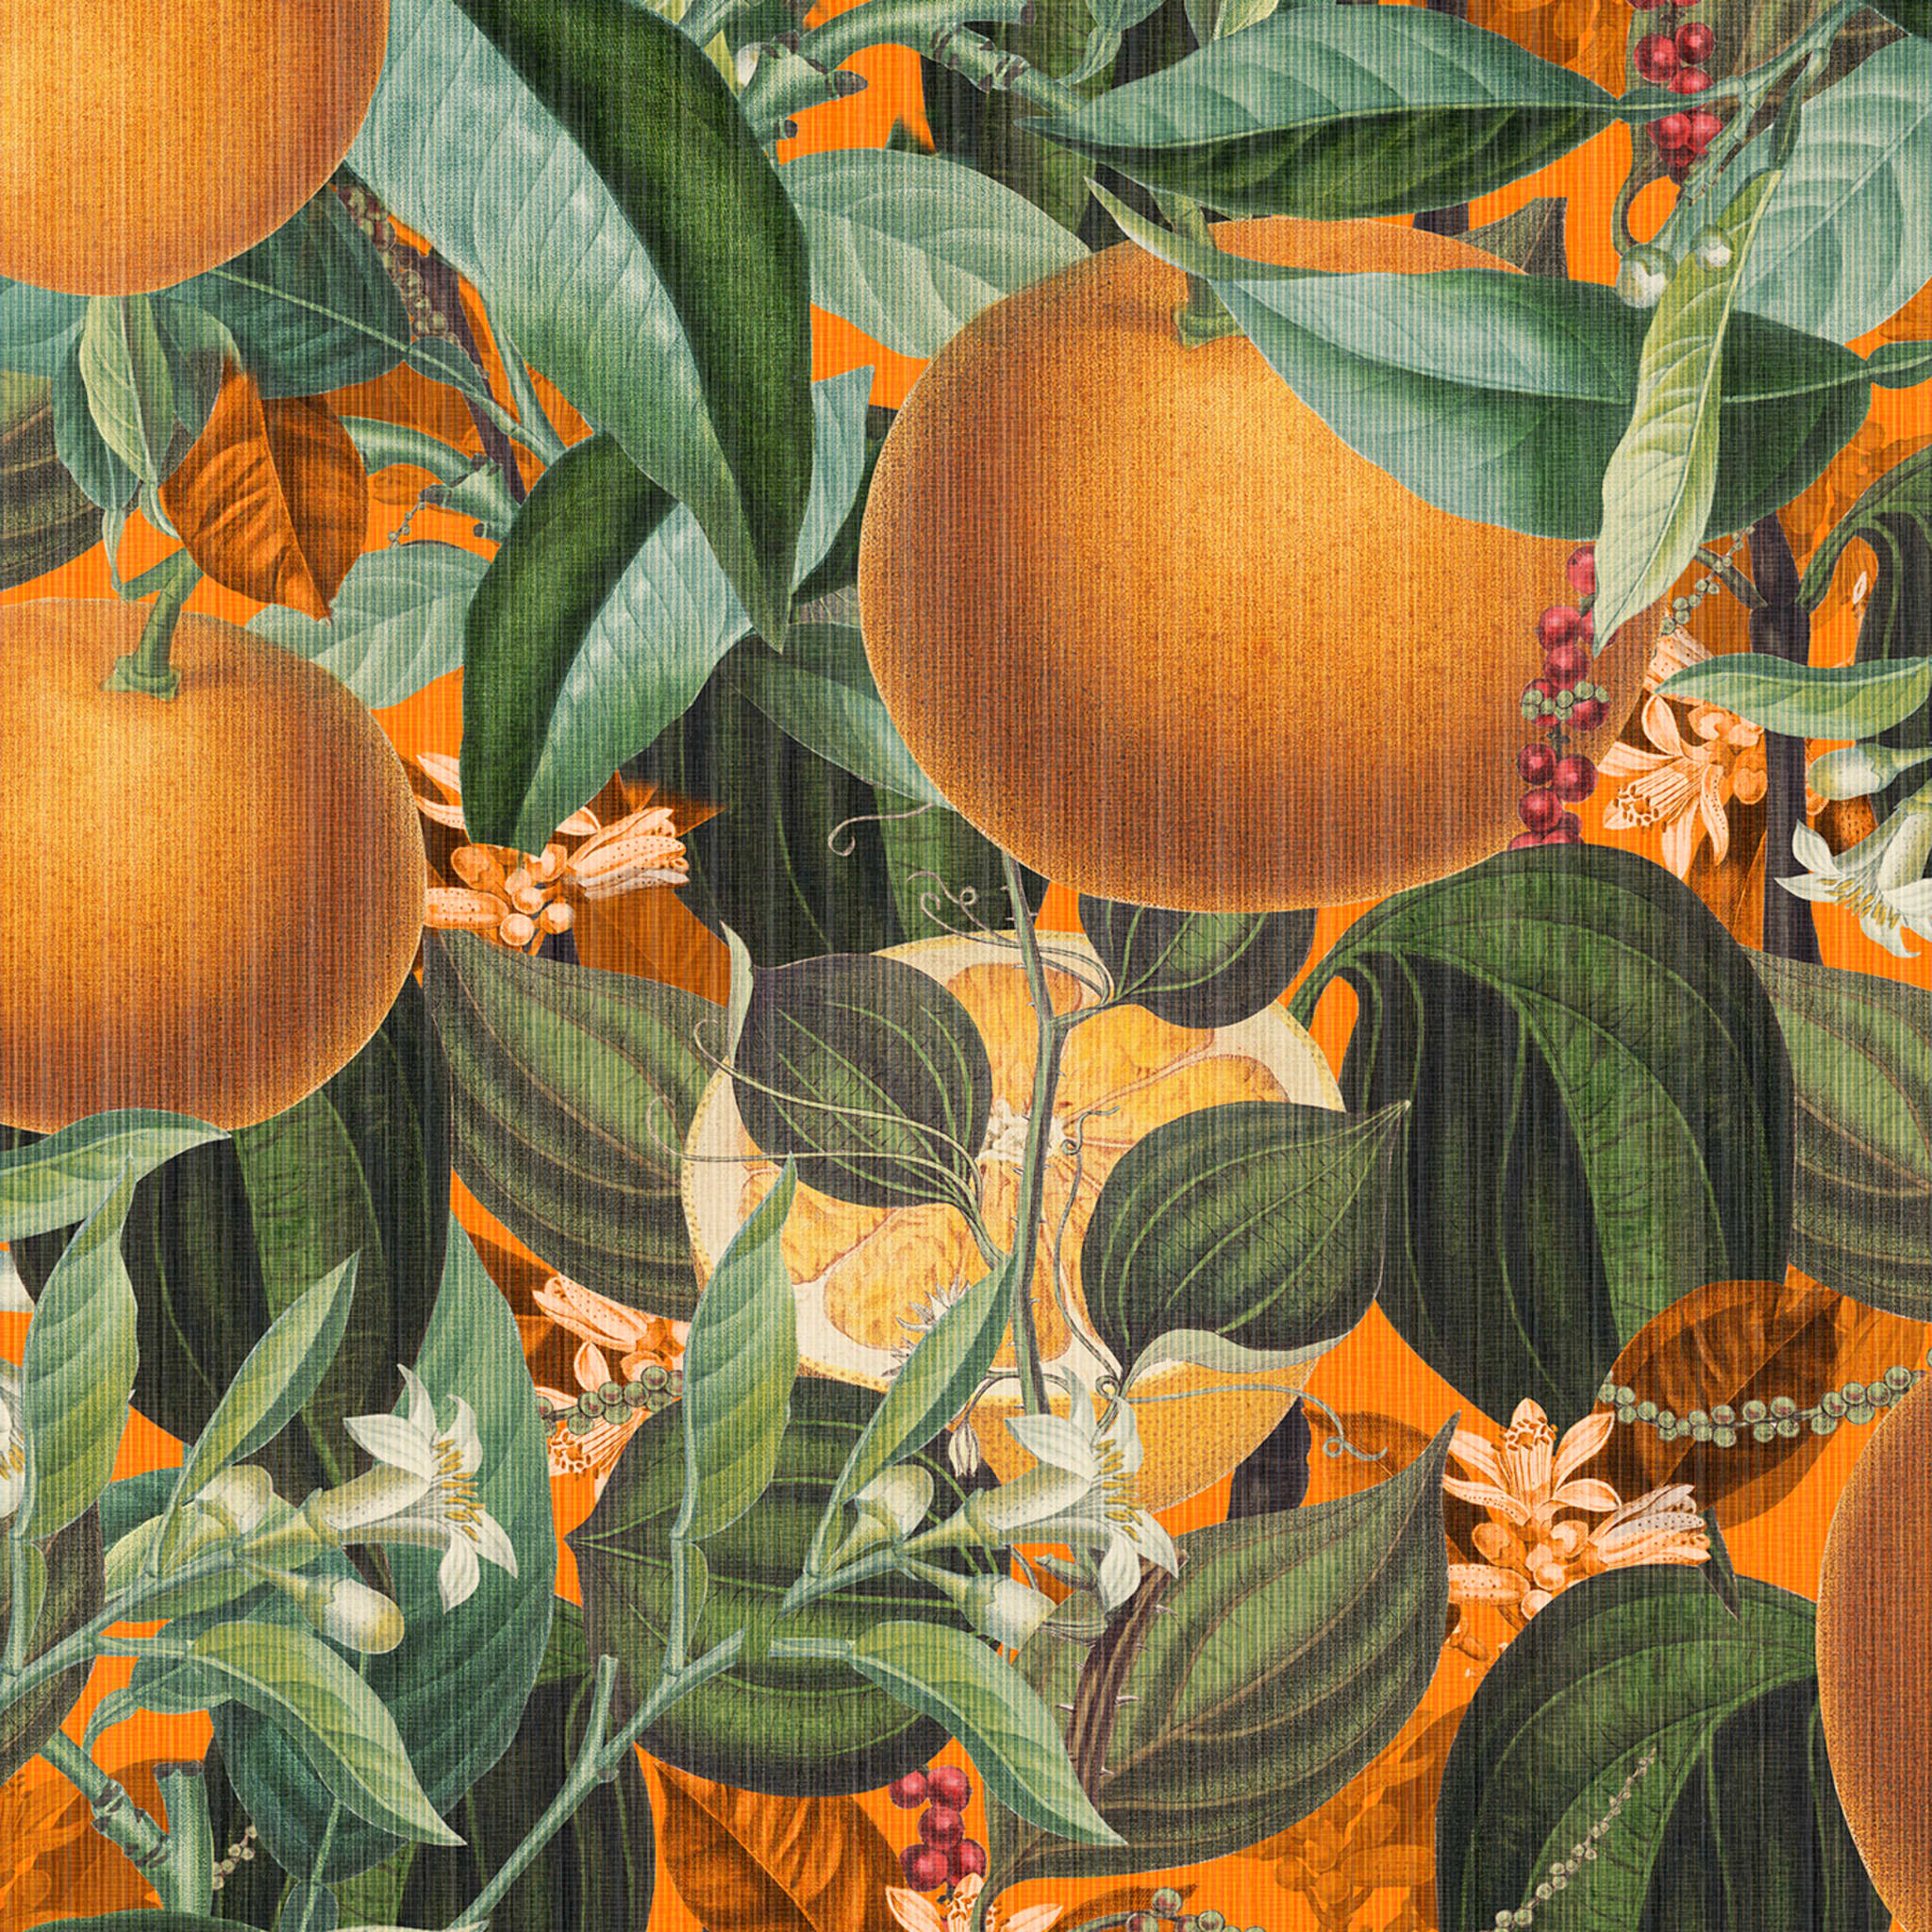 Giant Orange Wallpaper by Vzn Studio #2 - Alternative view 1